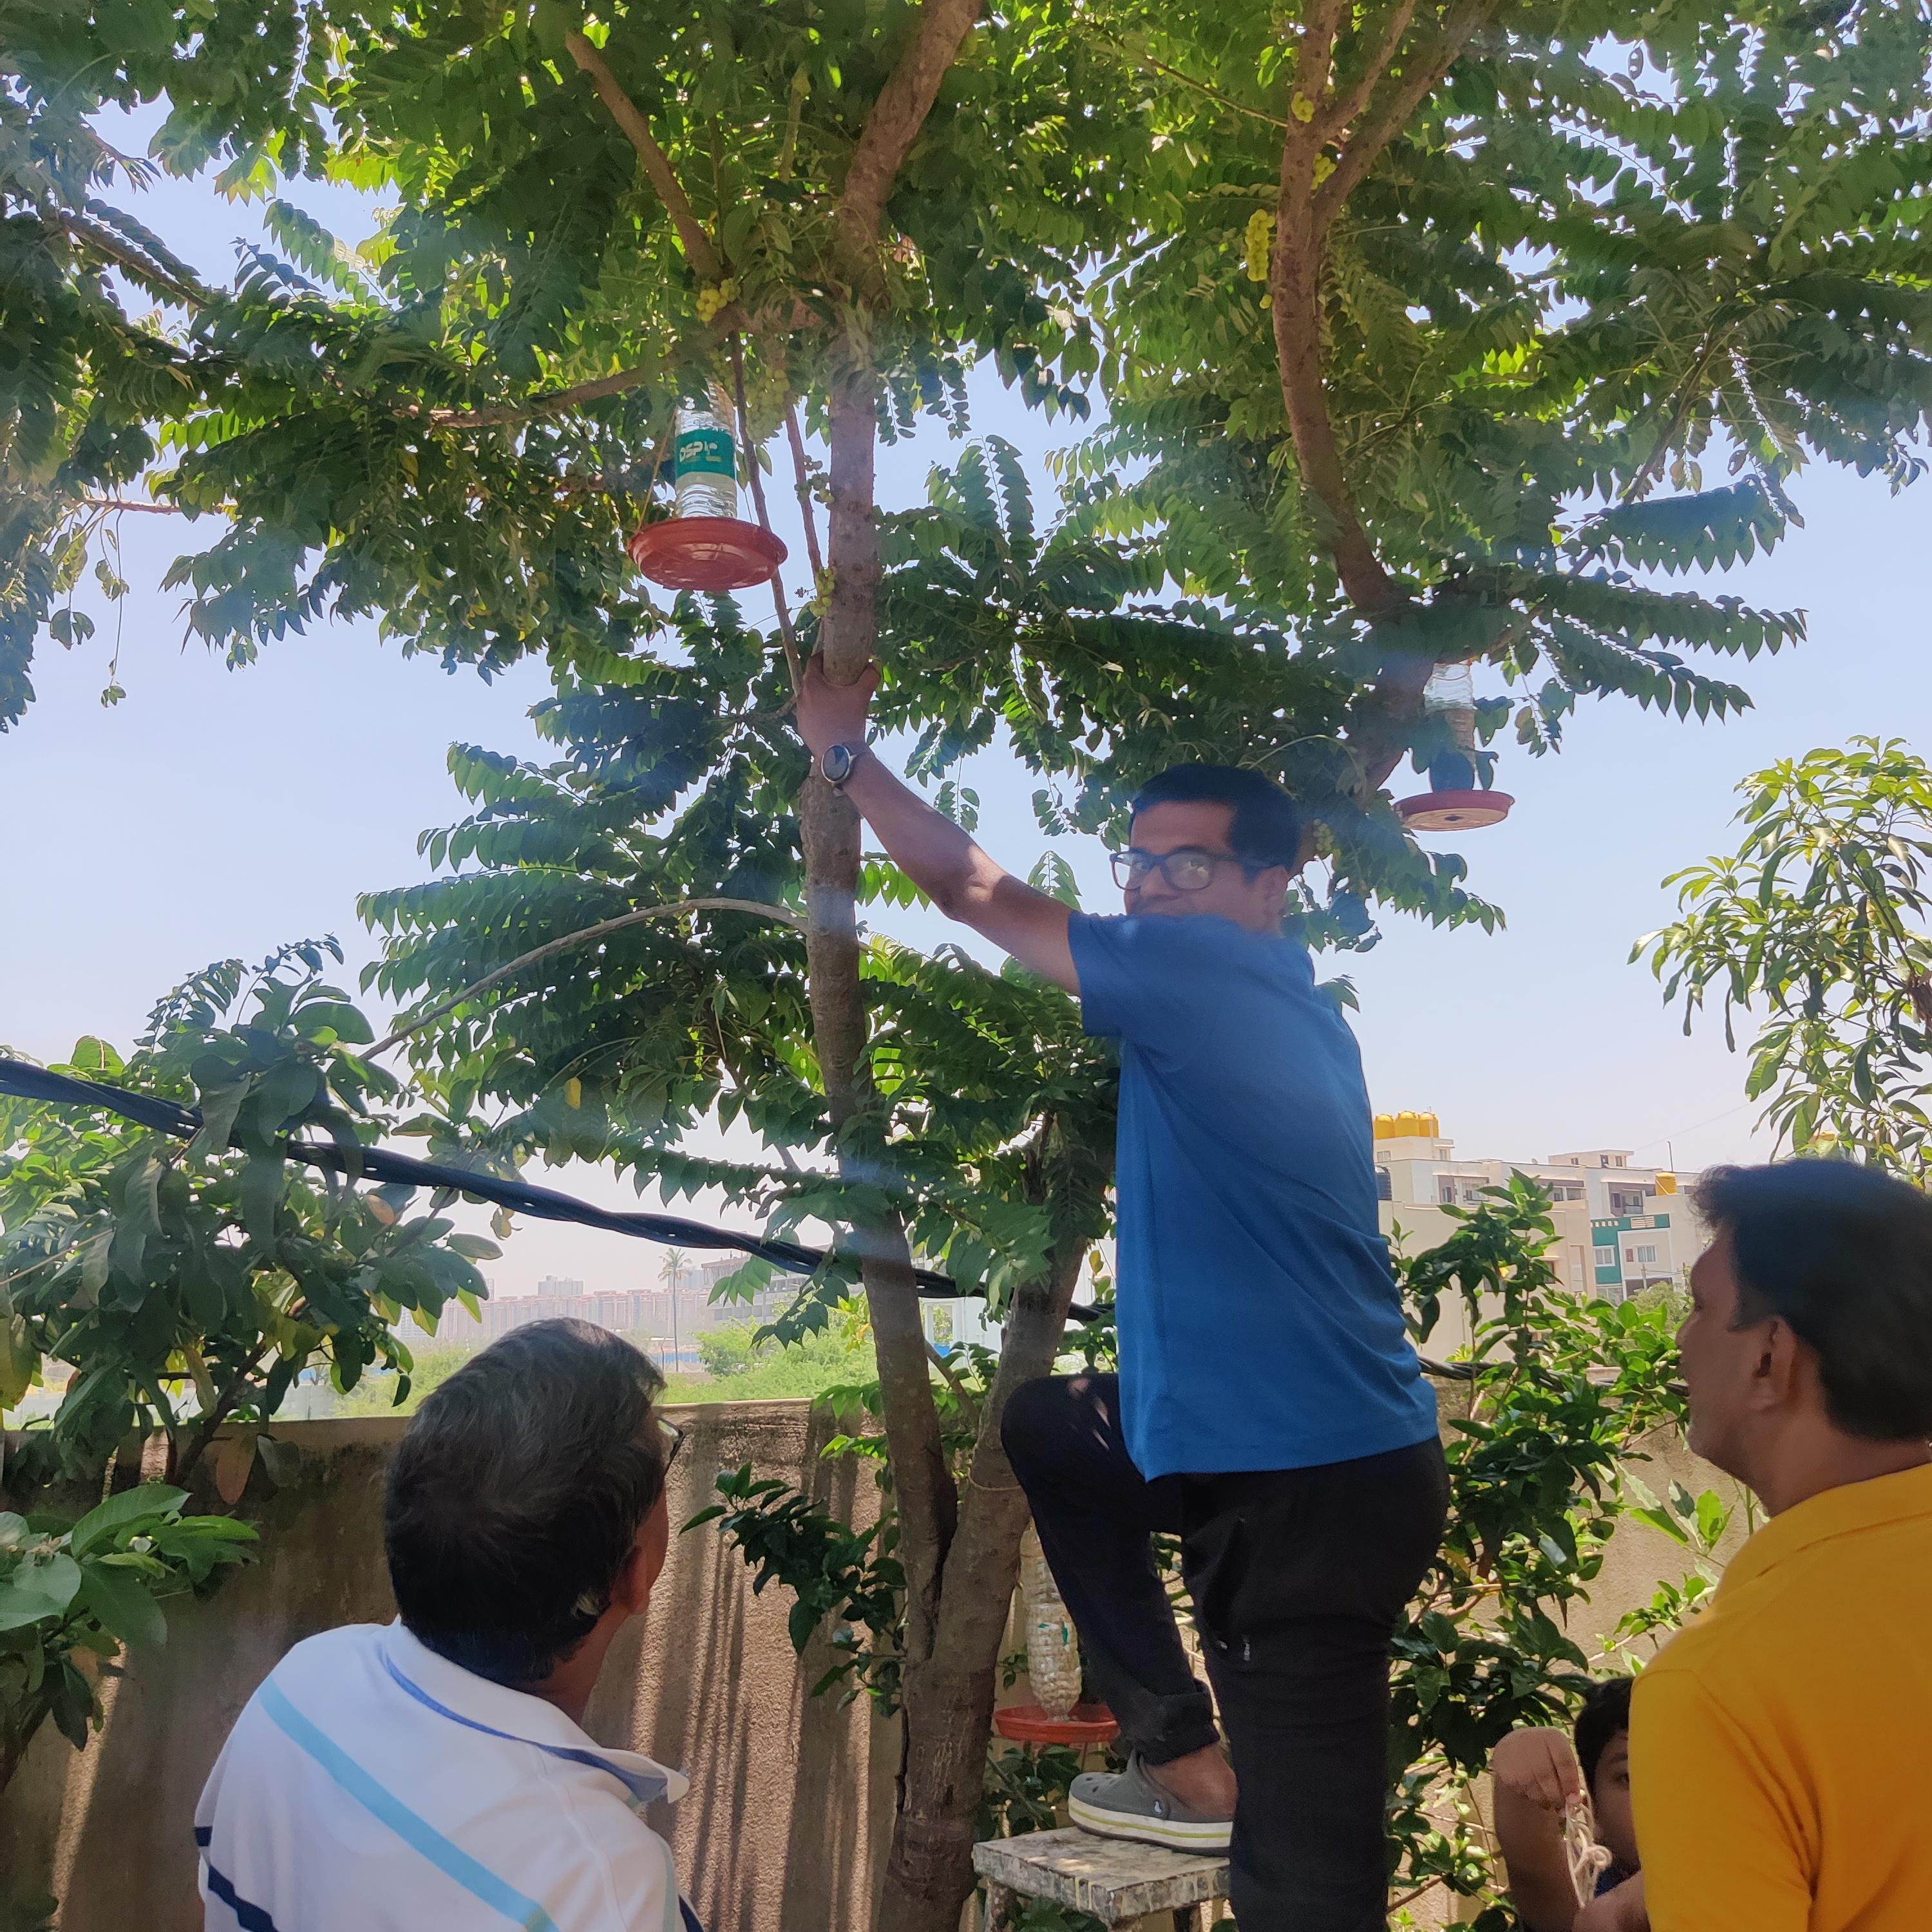 Man putting a bird feeder in a tree